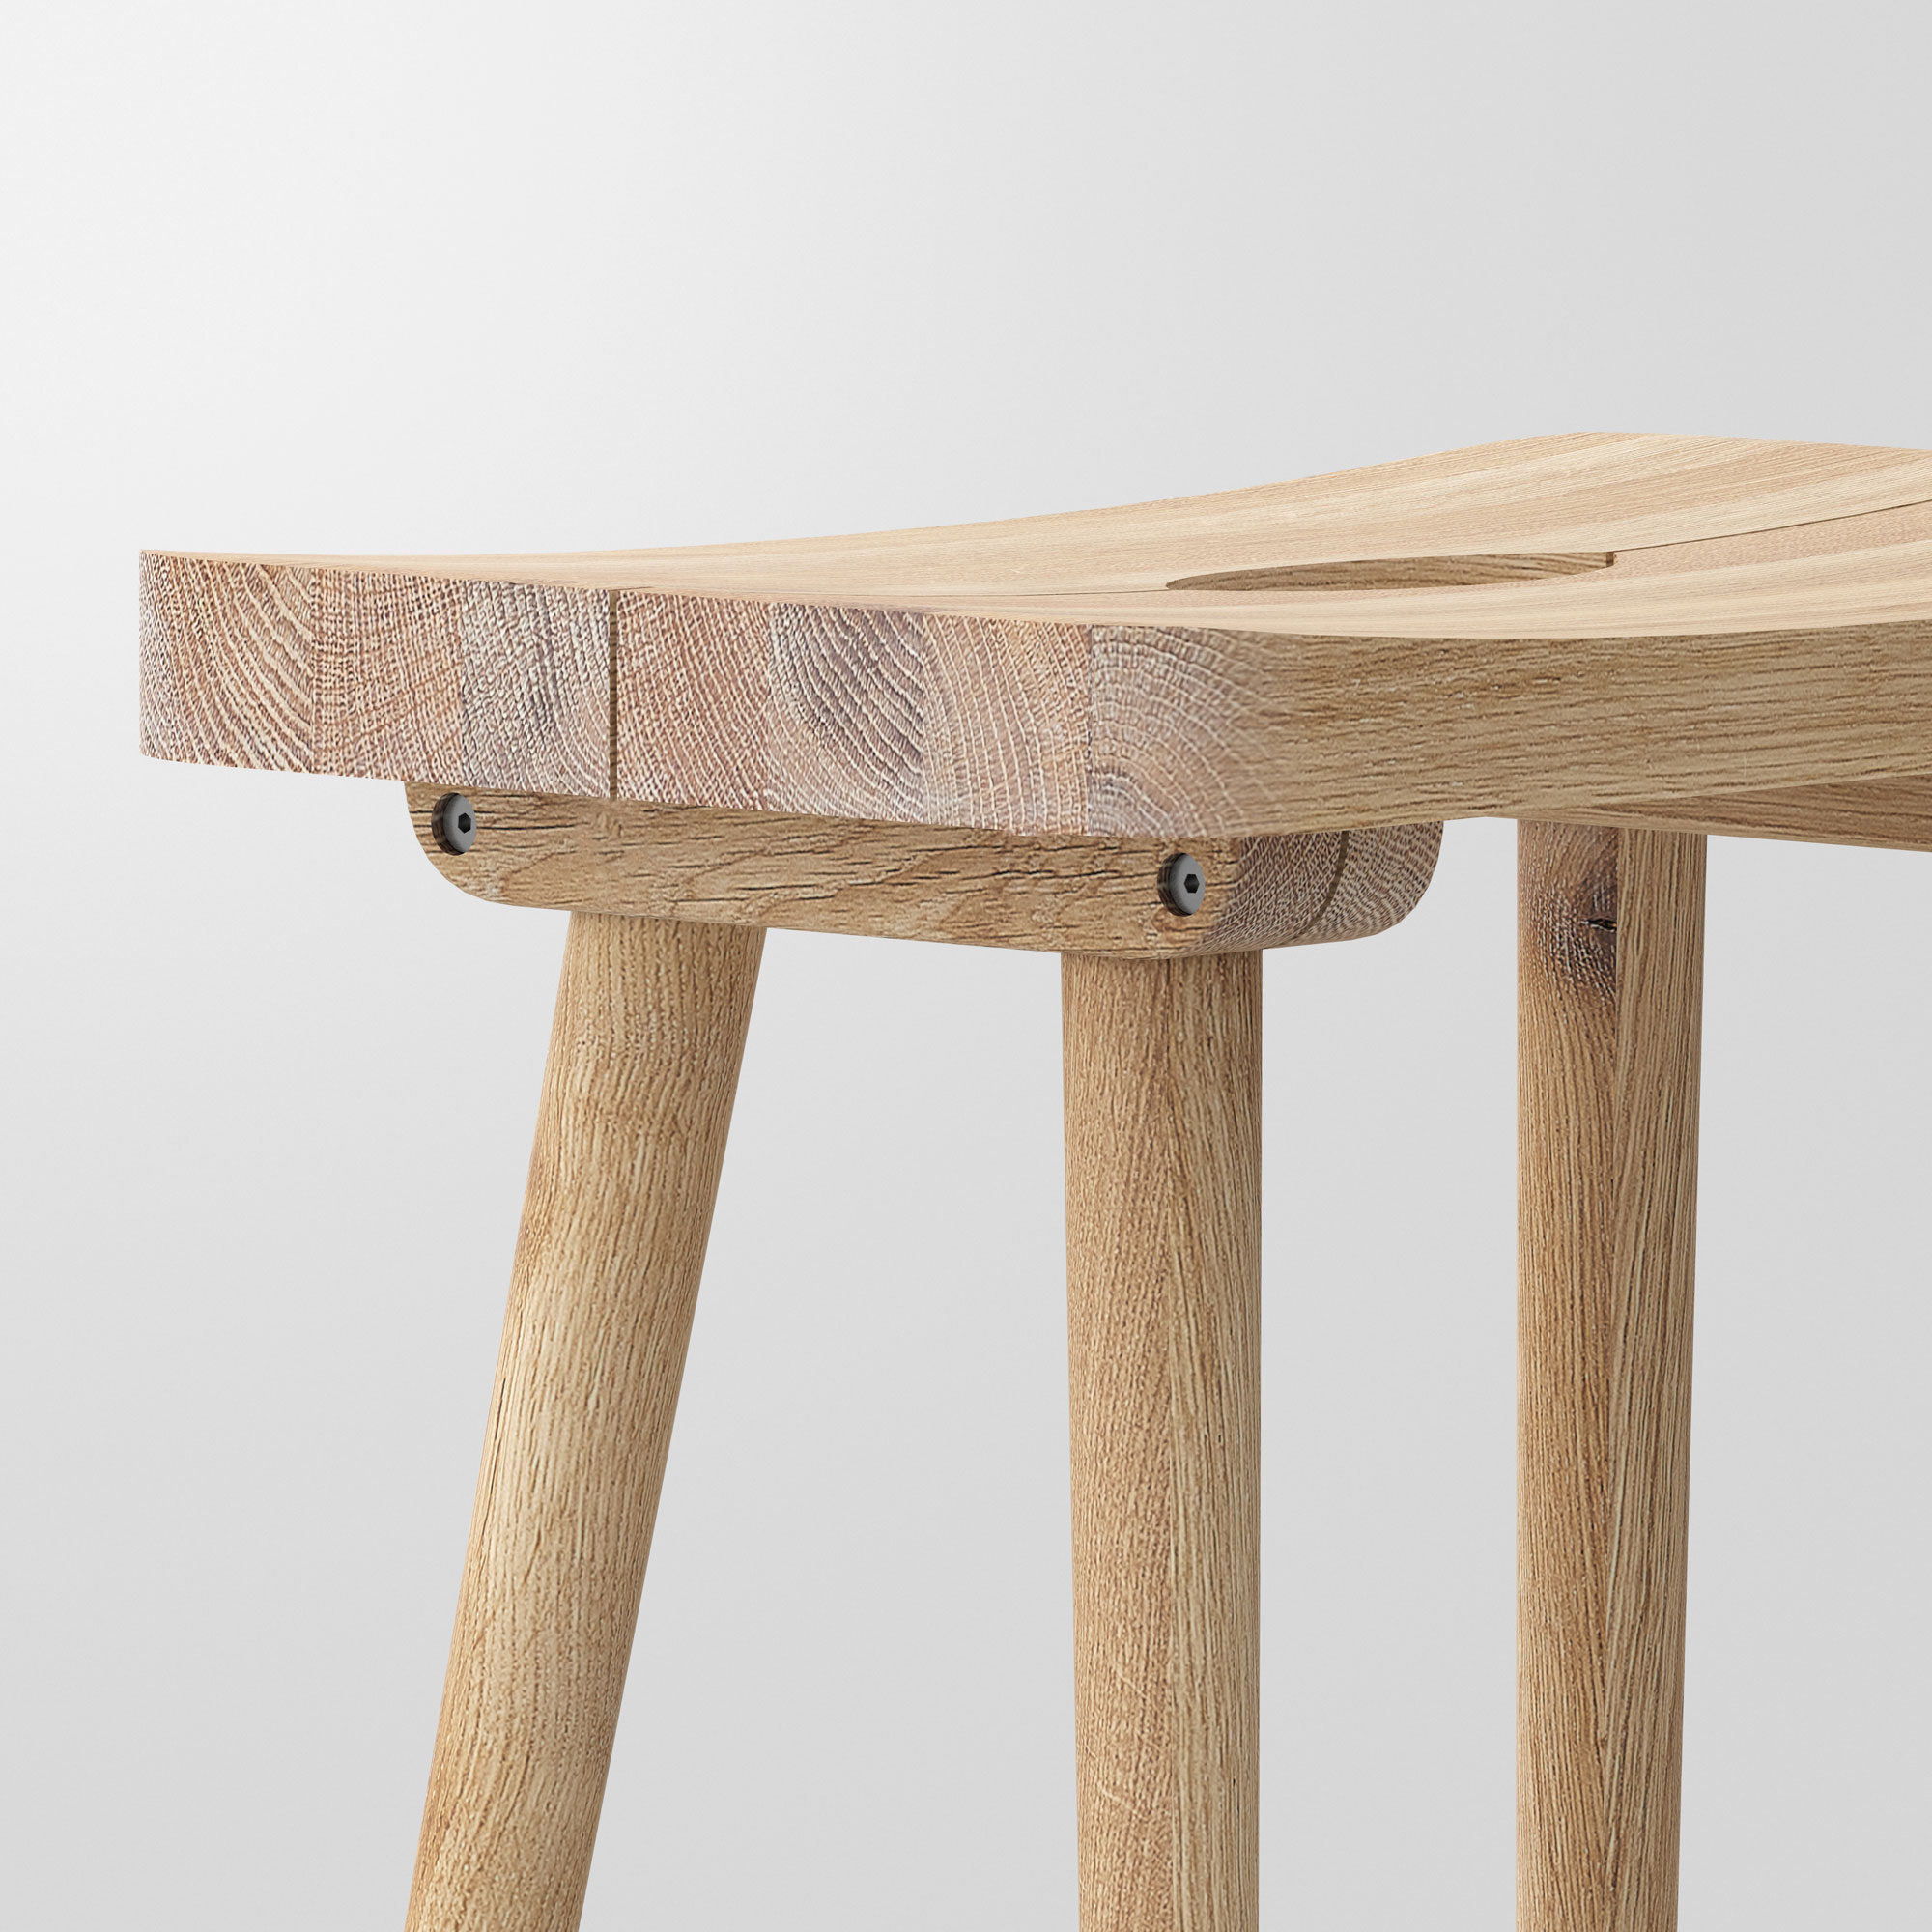 Wood Stool UNA cam3 custom made in solid wood by vitamin design